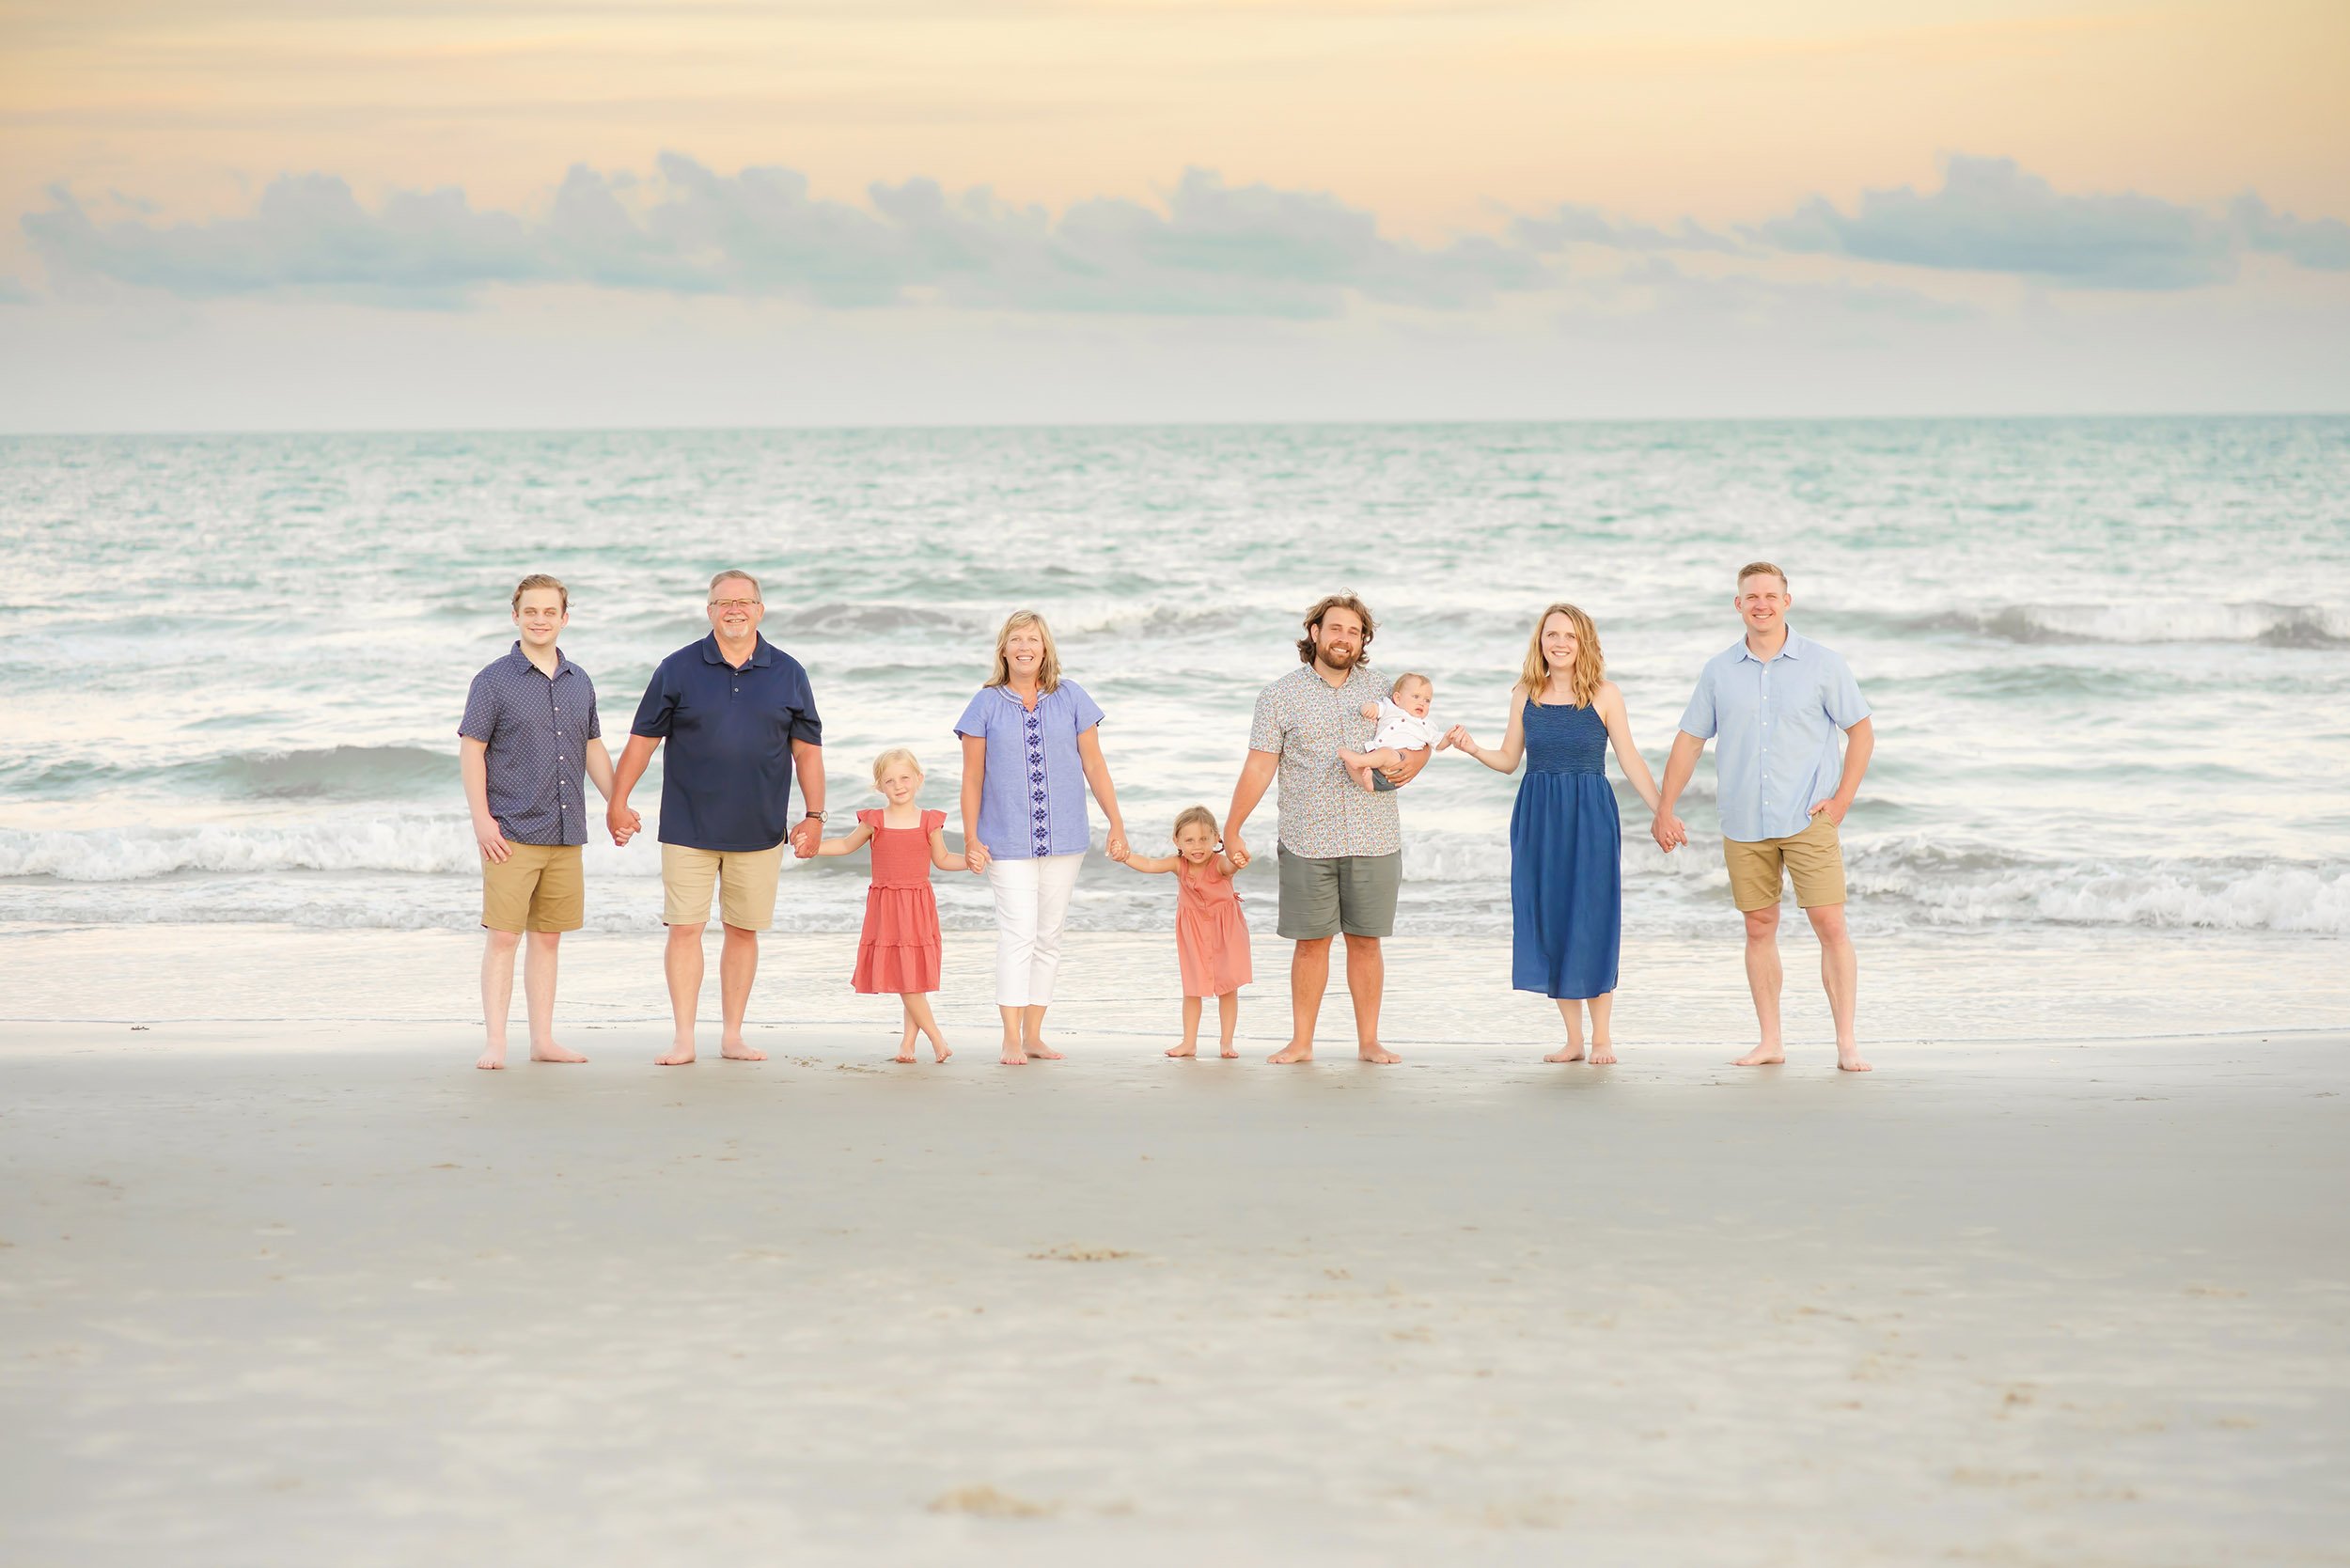 Family walking on beach